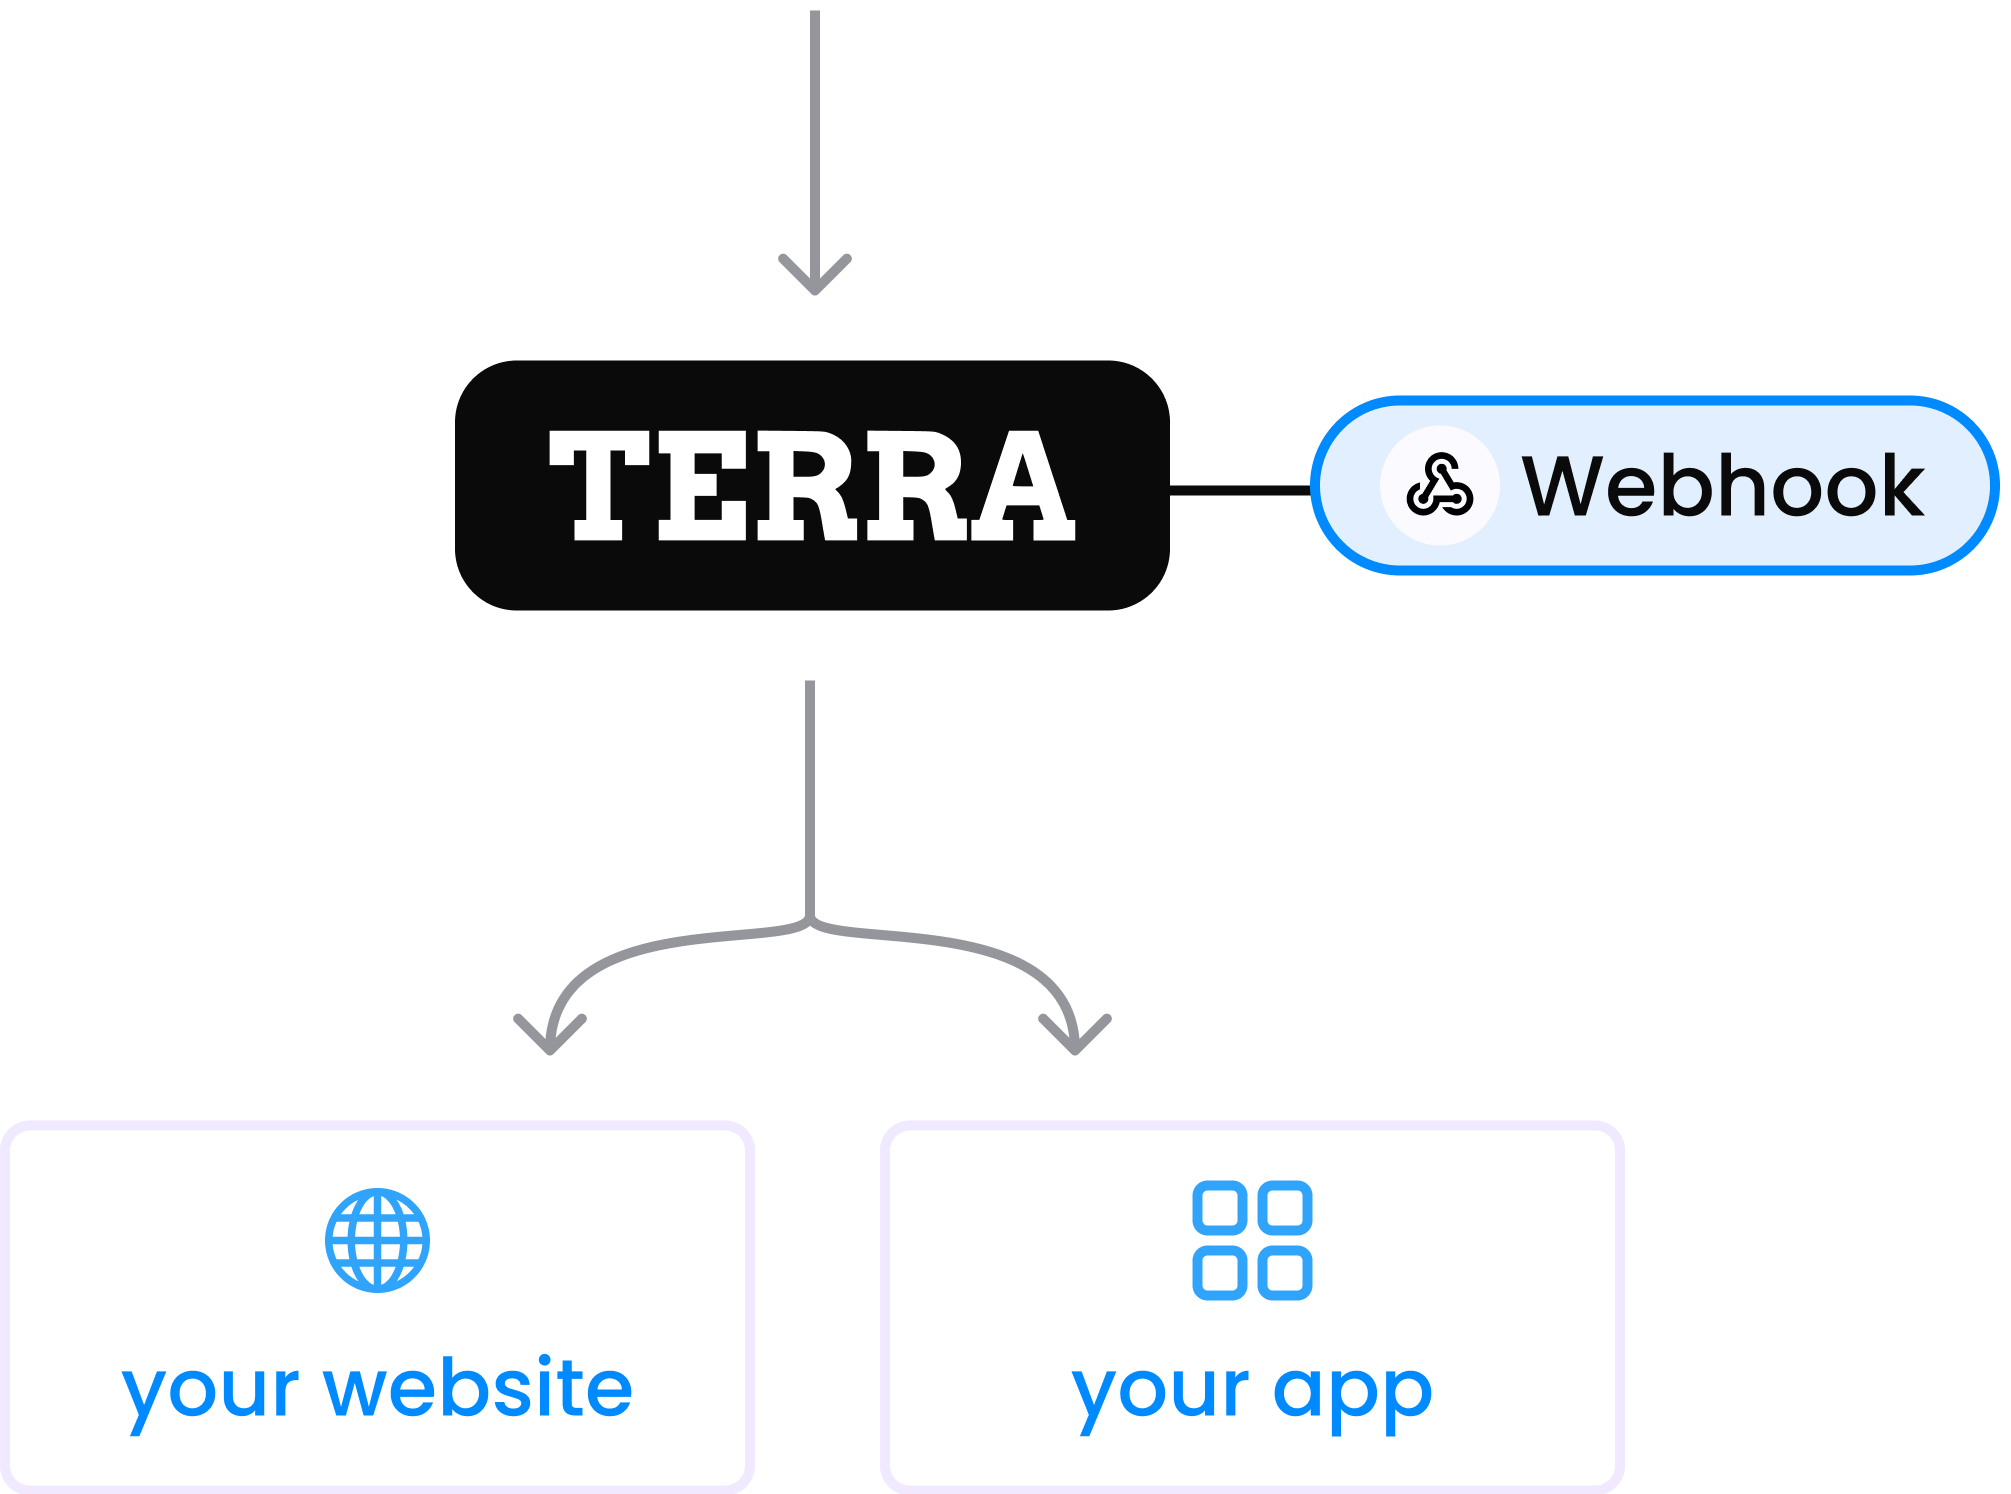 receiving data from xert integration via webhooks to your app or website